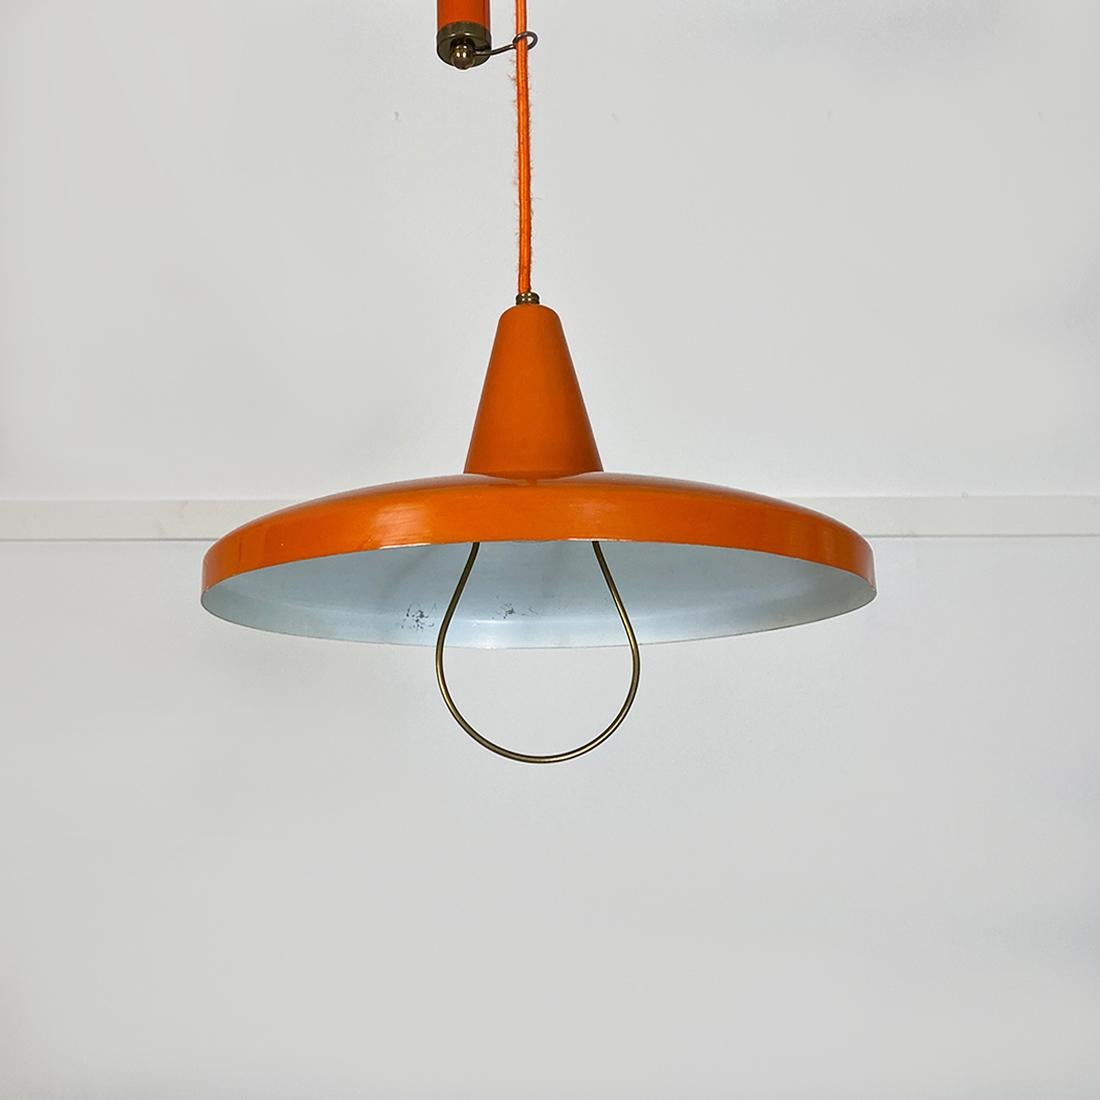 Mid-20th Century Italian Mid-Century Modern Orange Metal Chandelier with Sliding Support, 1960s